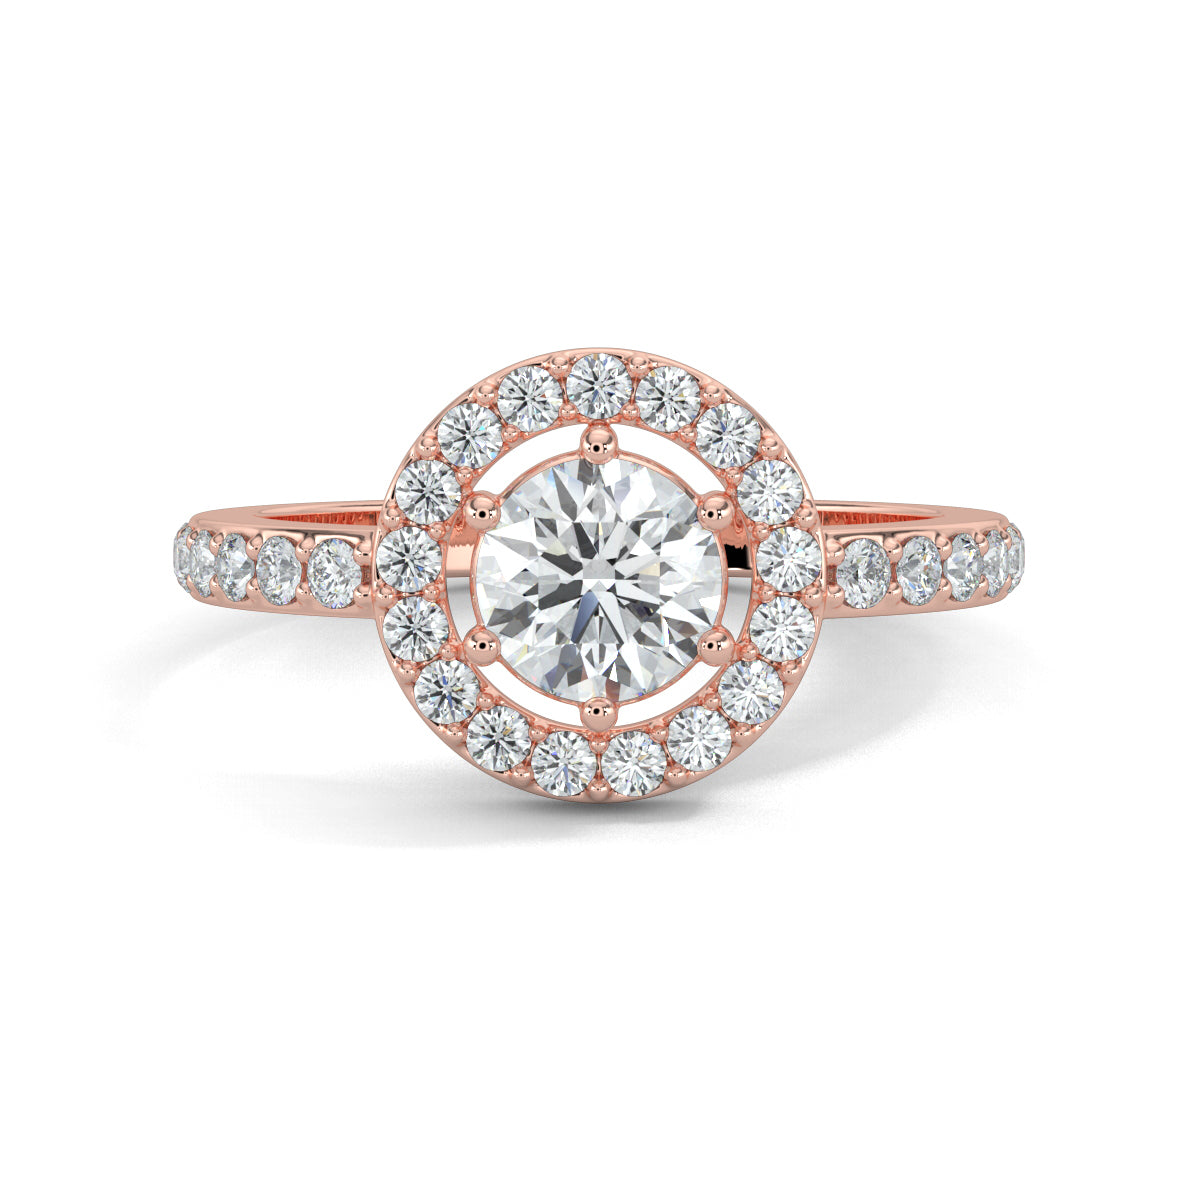 Rose Gold, Diamond Ring, natural diamond ring, lab-grown diamond ring, Everyday diamond ring, round diamond ring, halo setting, pave-set diamonds, elegant diamond ring, classic jewelry